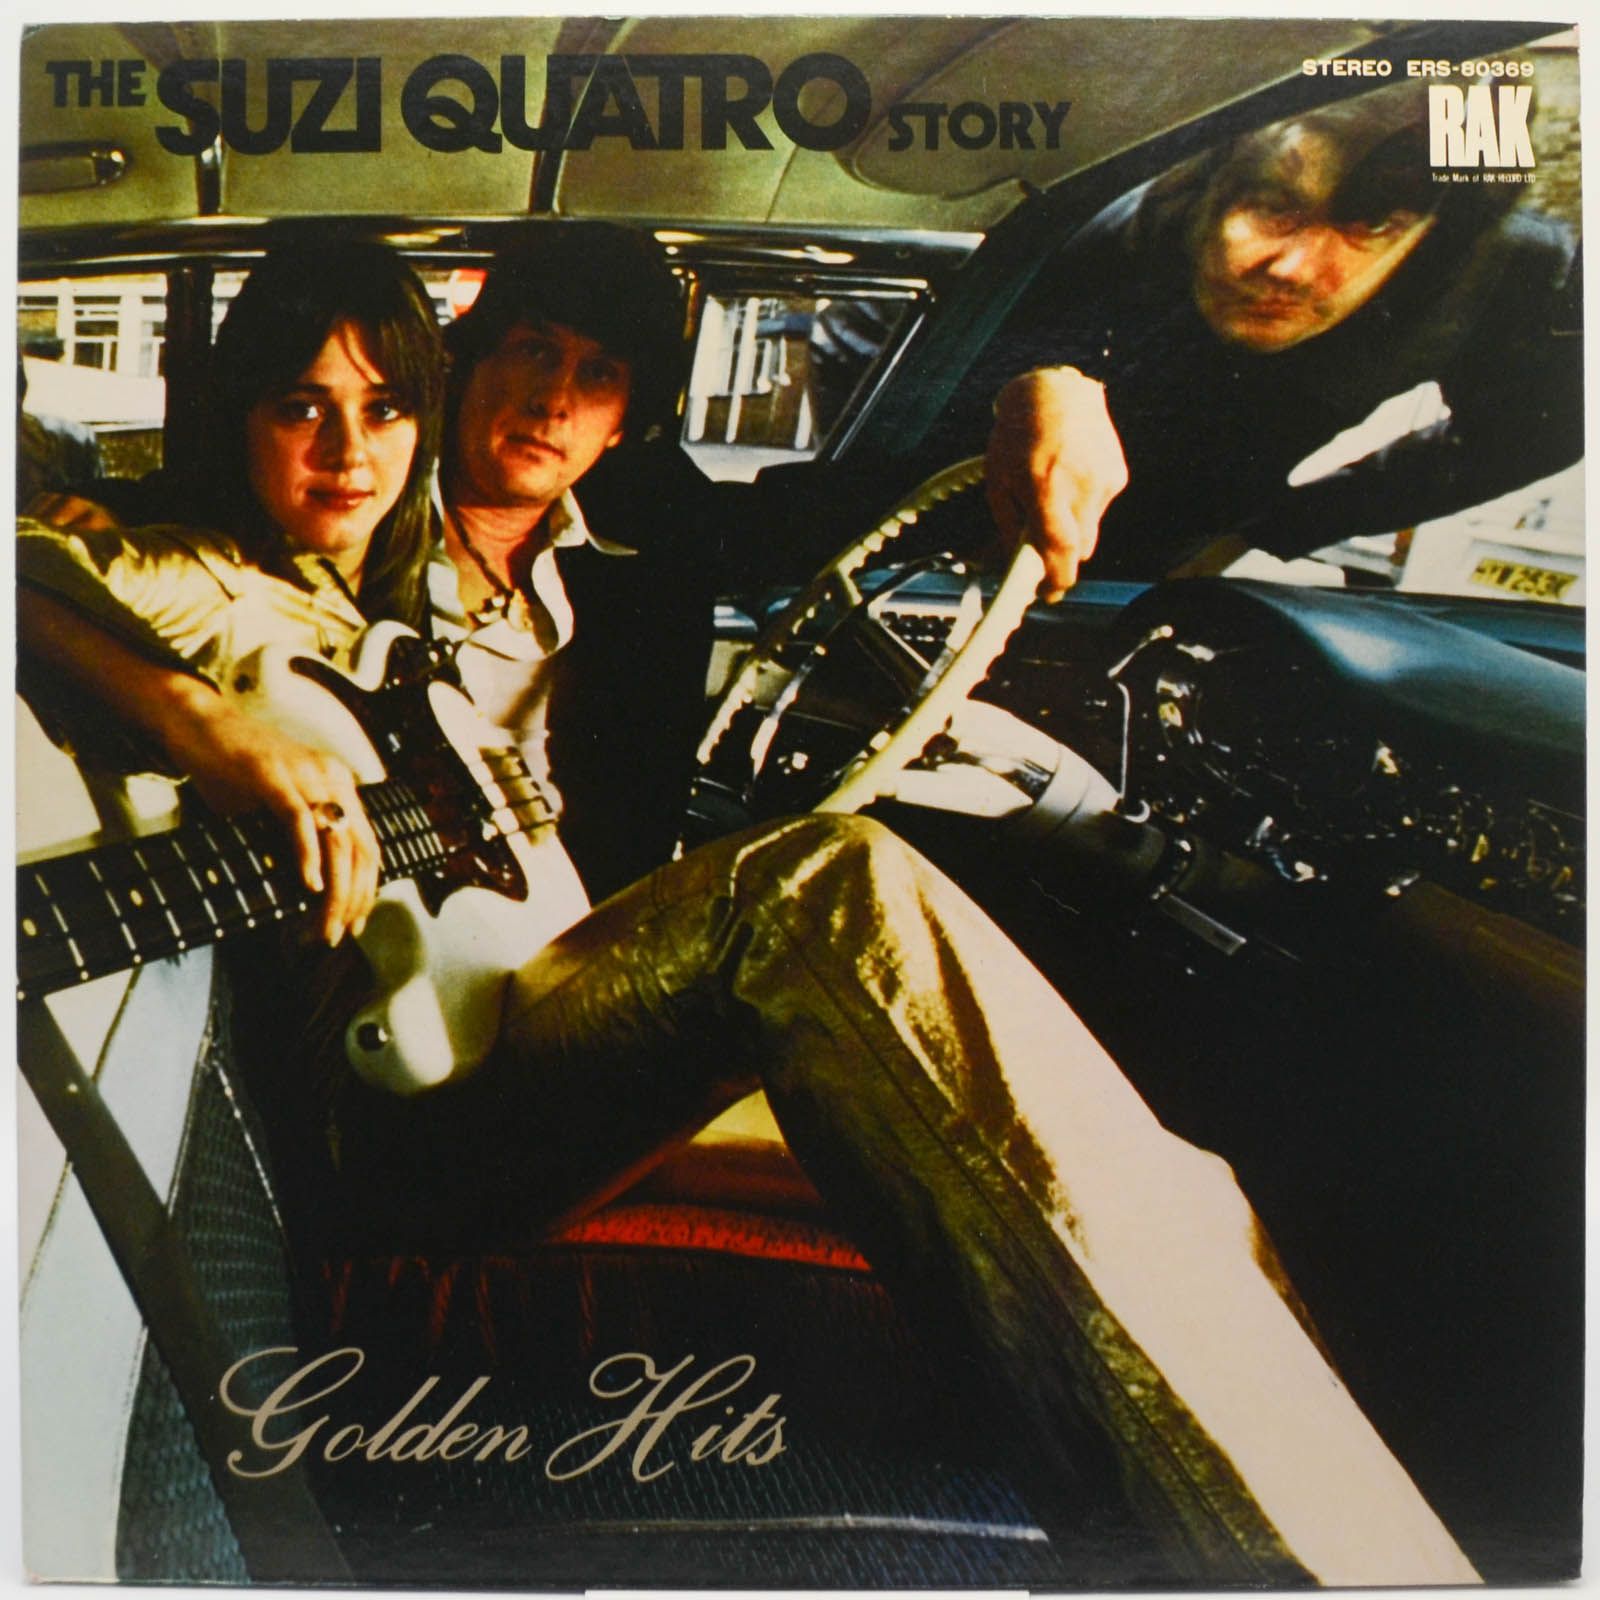 Suzi Quatro — The Suzi Quatro Story - Golden Hits (poster), 1975